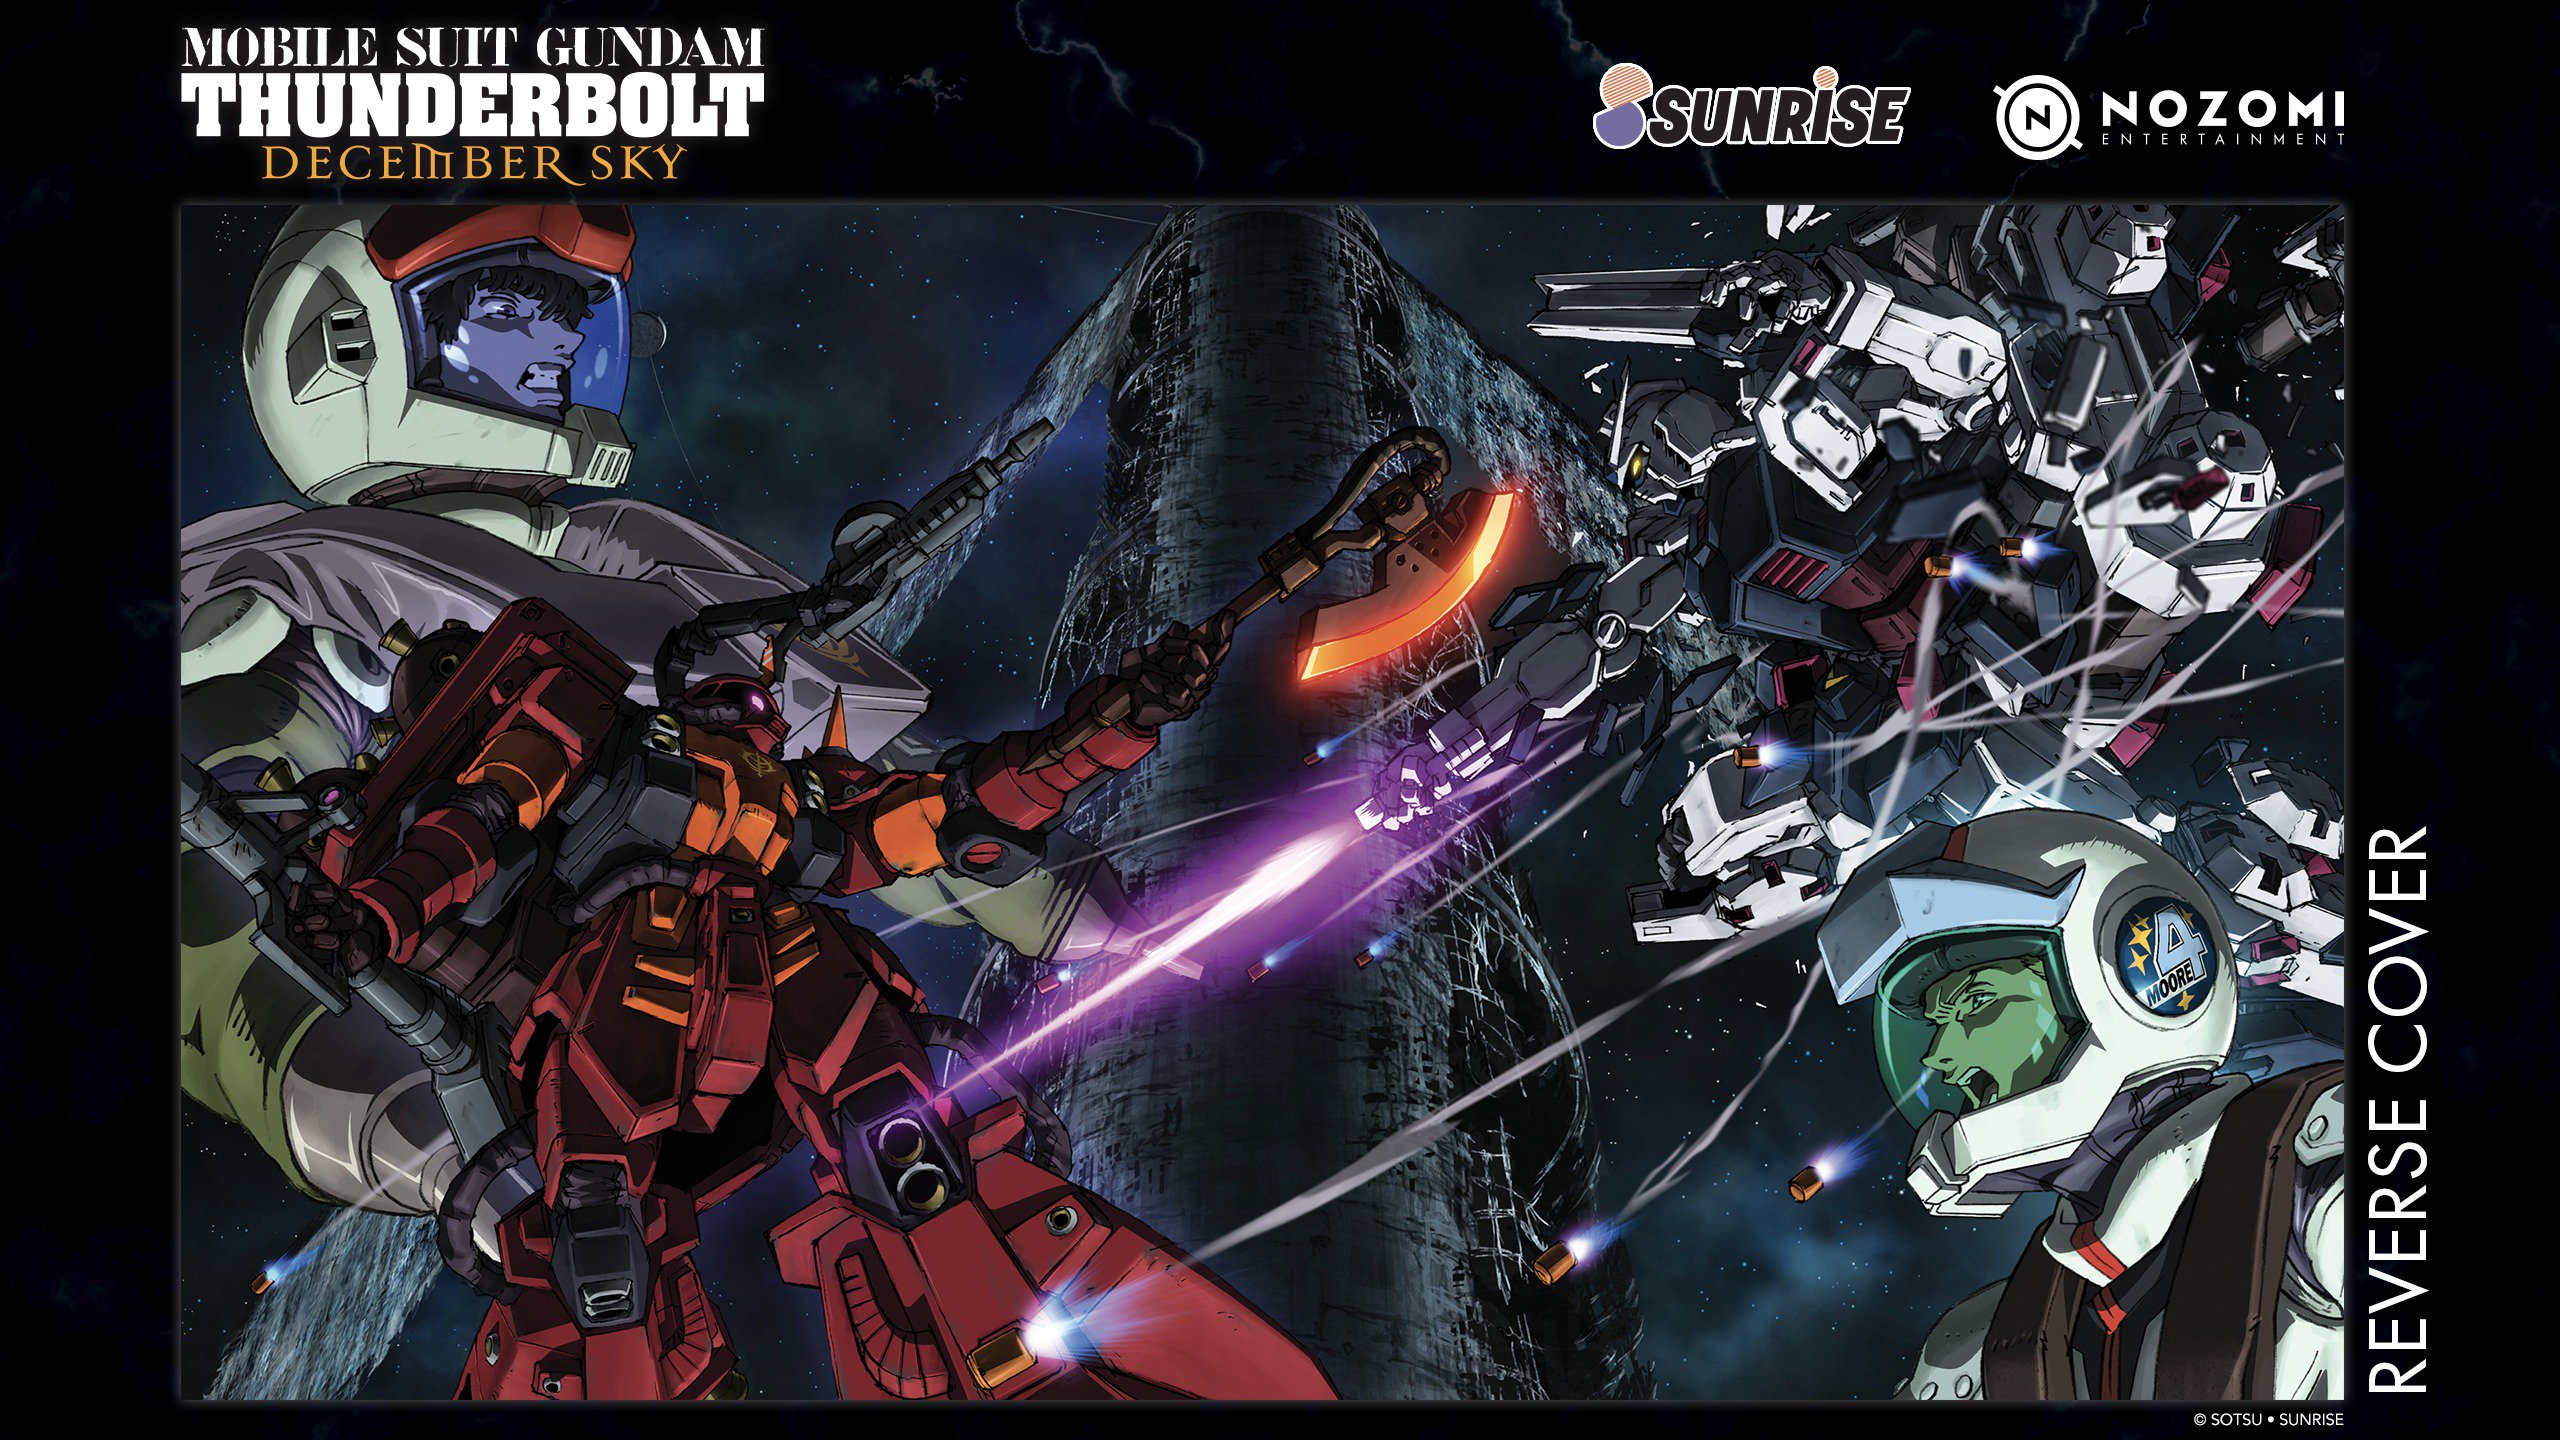 Nozomi Entertainment On Gundam Thunderbolt December Sky